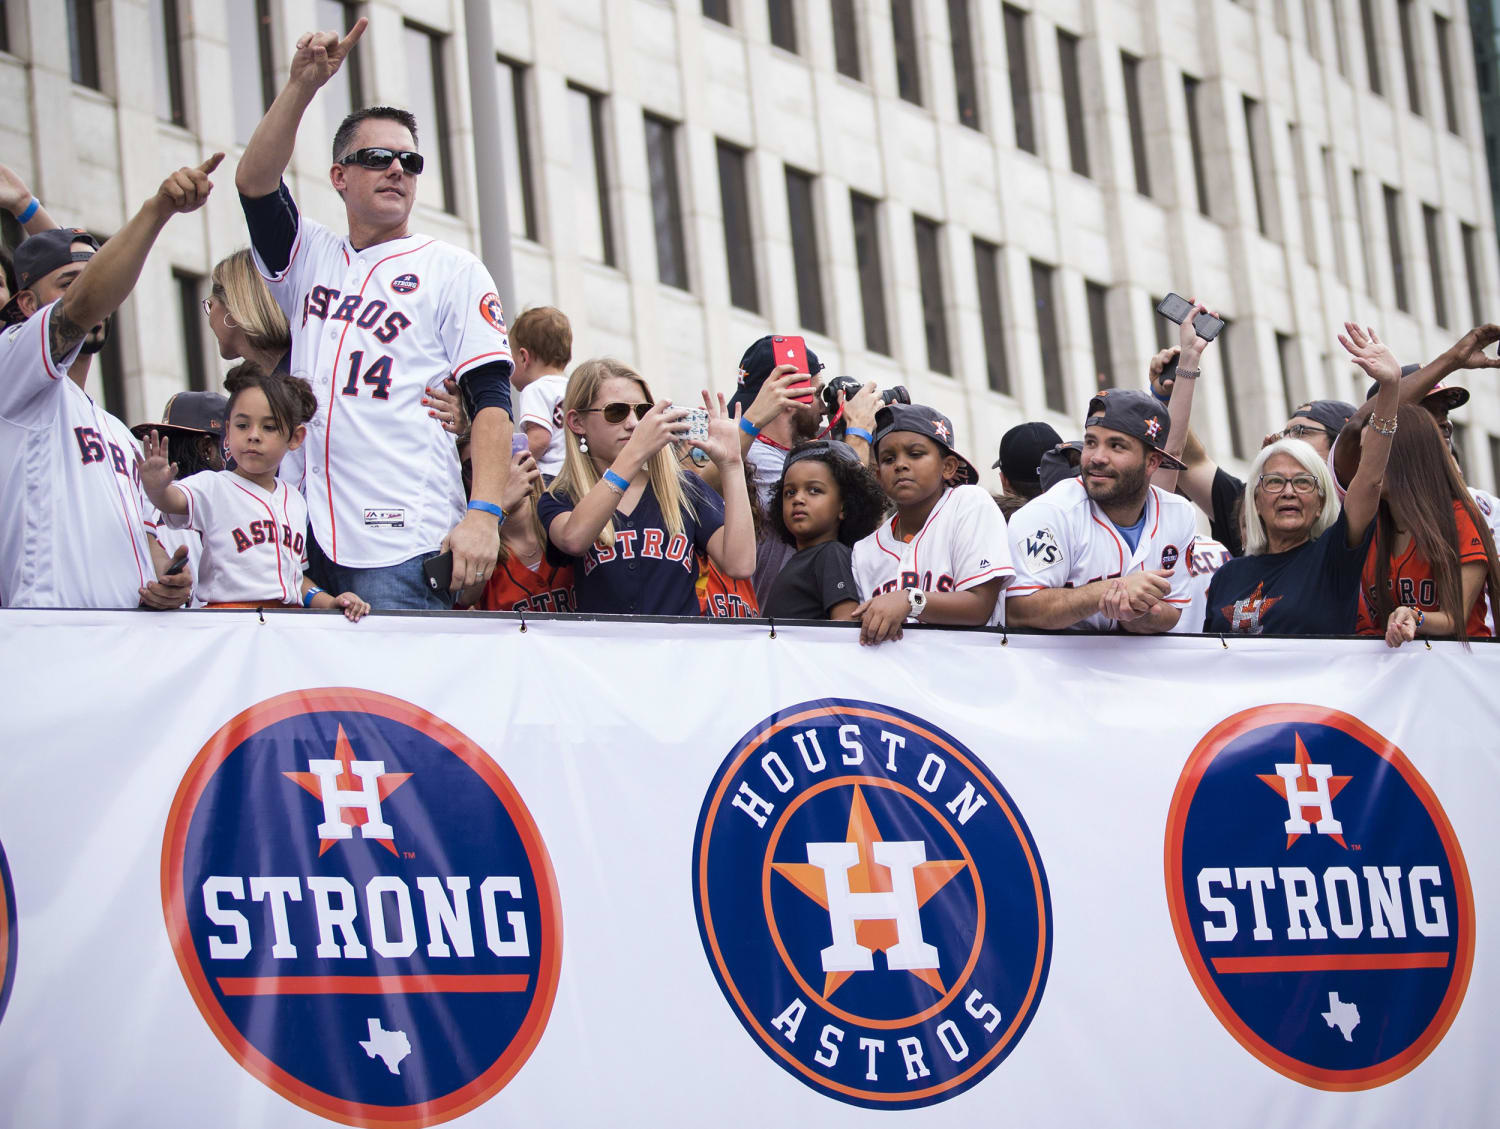 Thousands Gather to Celebrate Houston Astros World Series Championship